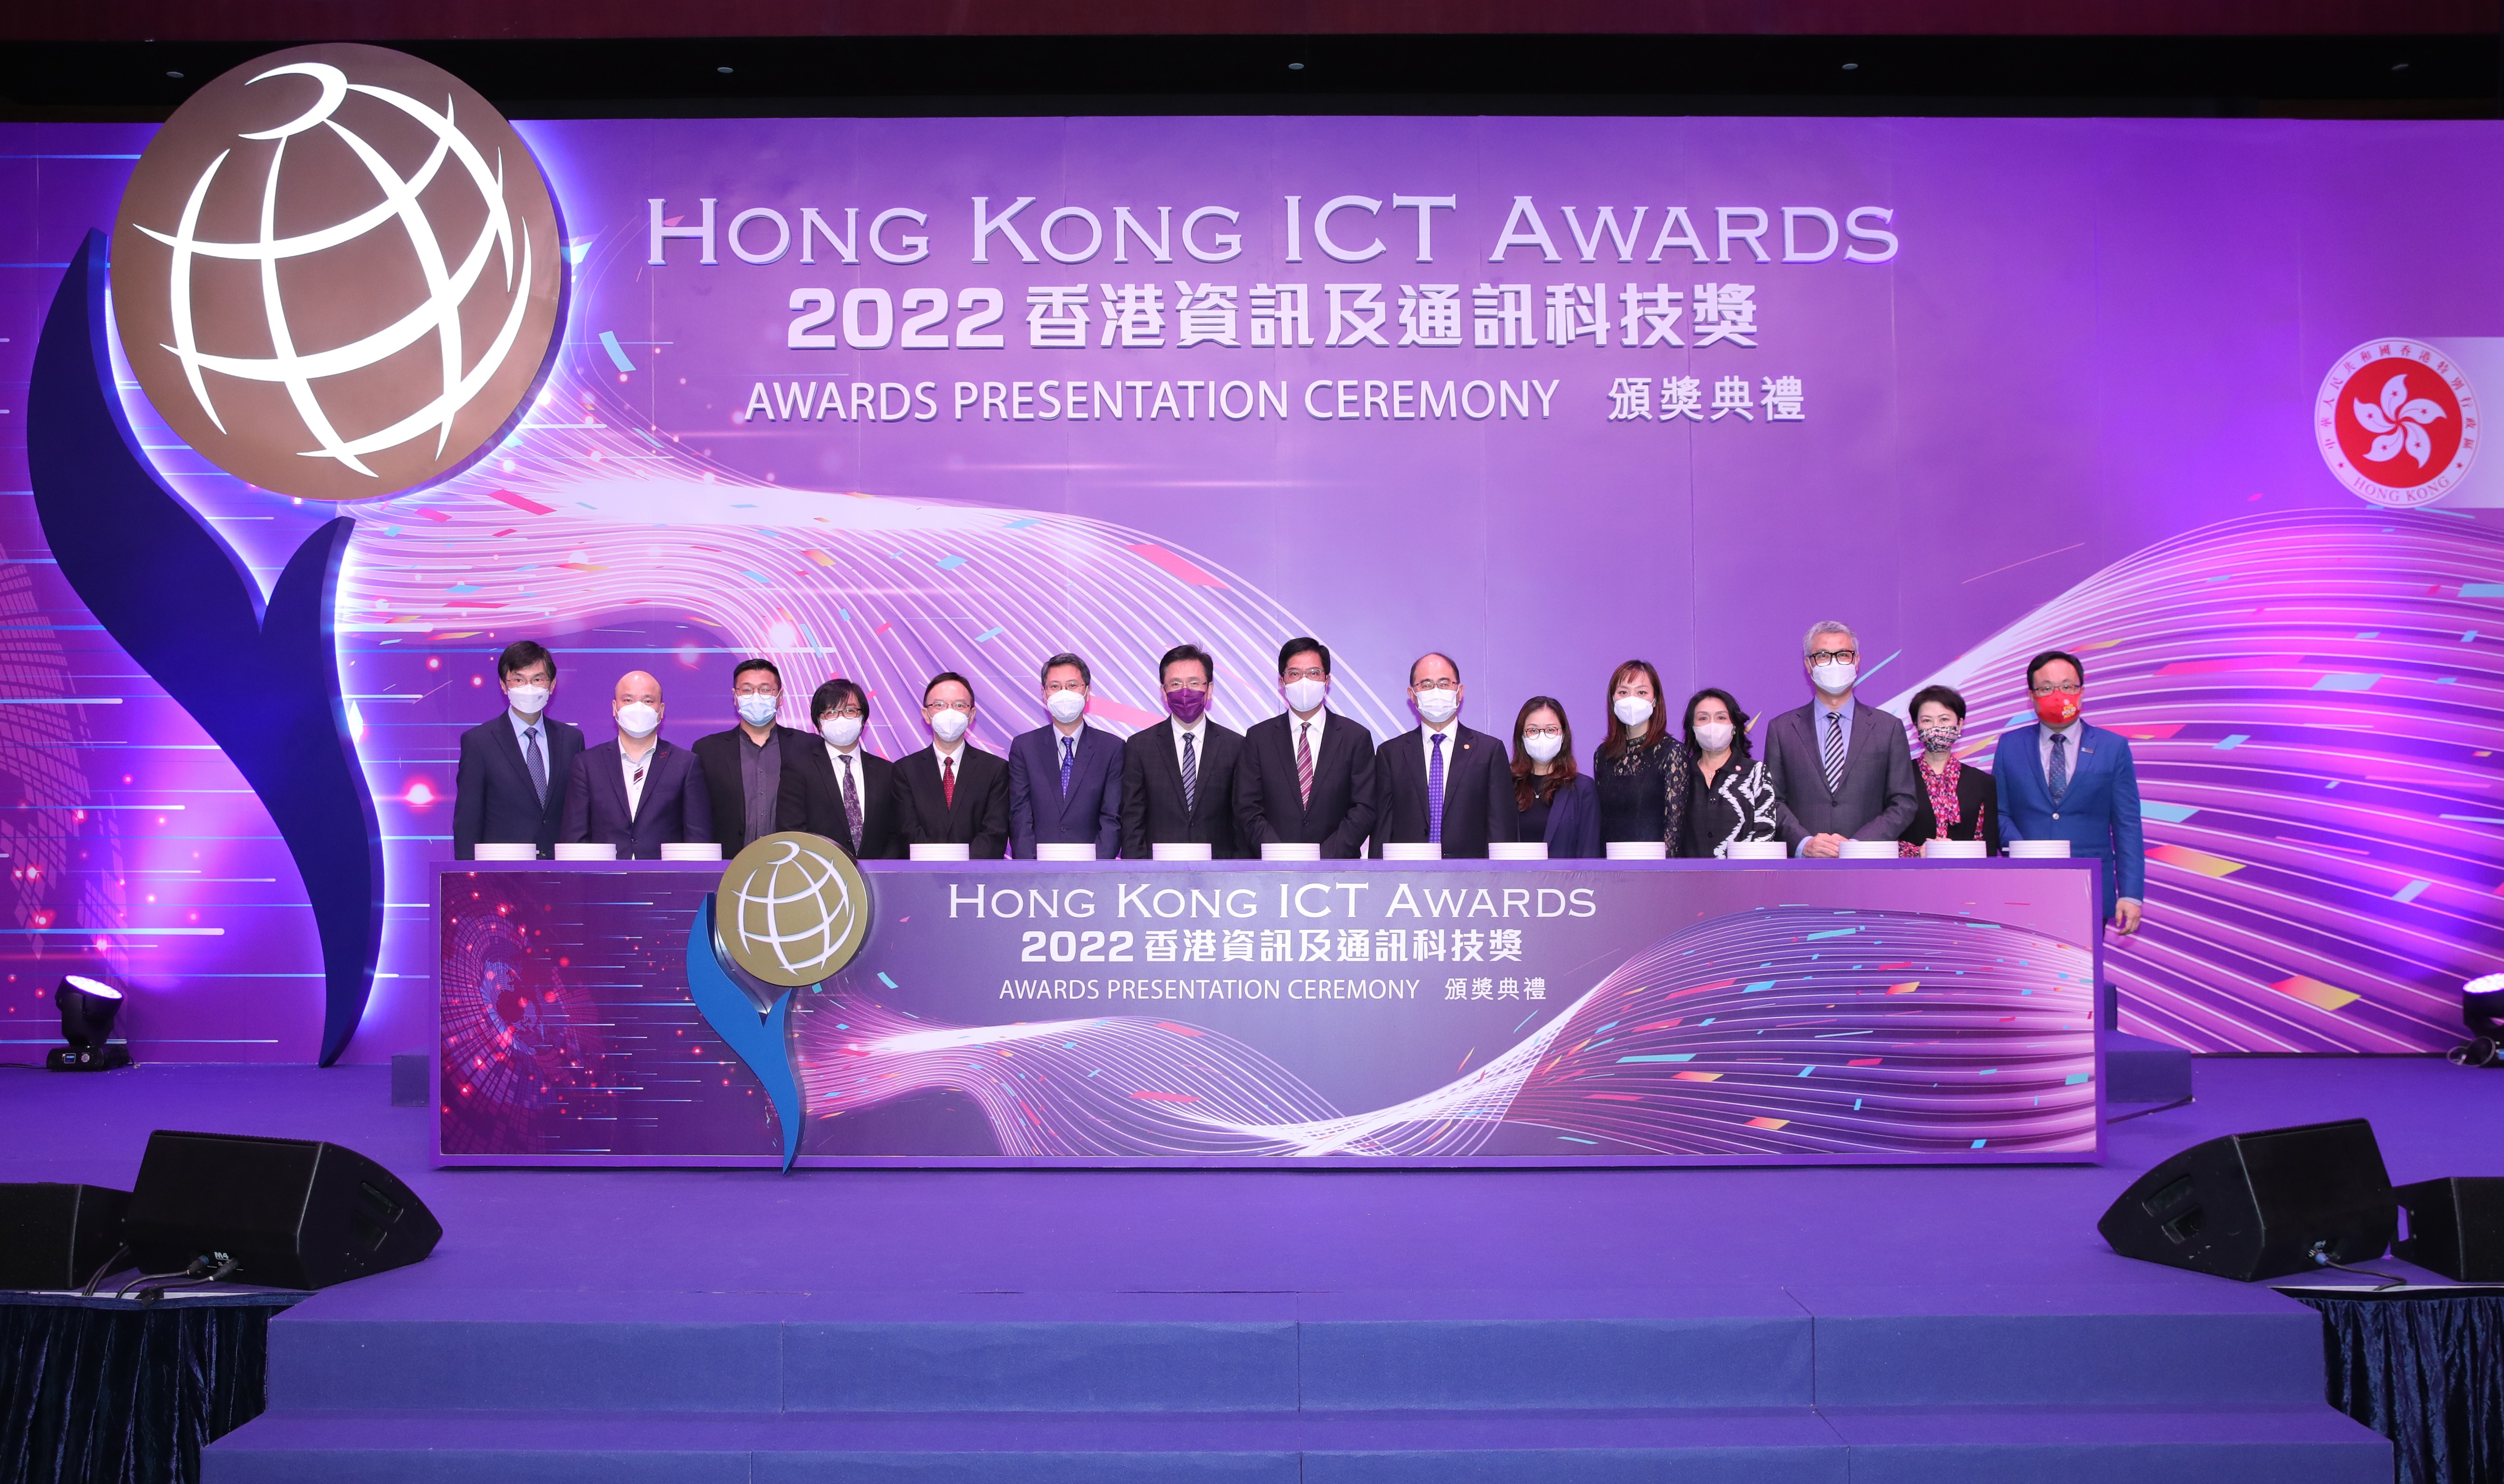 Hong Kong ICT Awards 2022 Awards Presentation Ceremony Kick-off Ceremony (before)